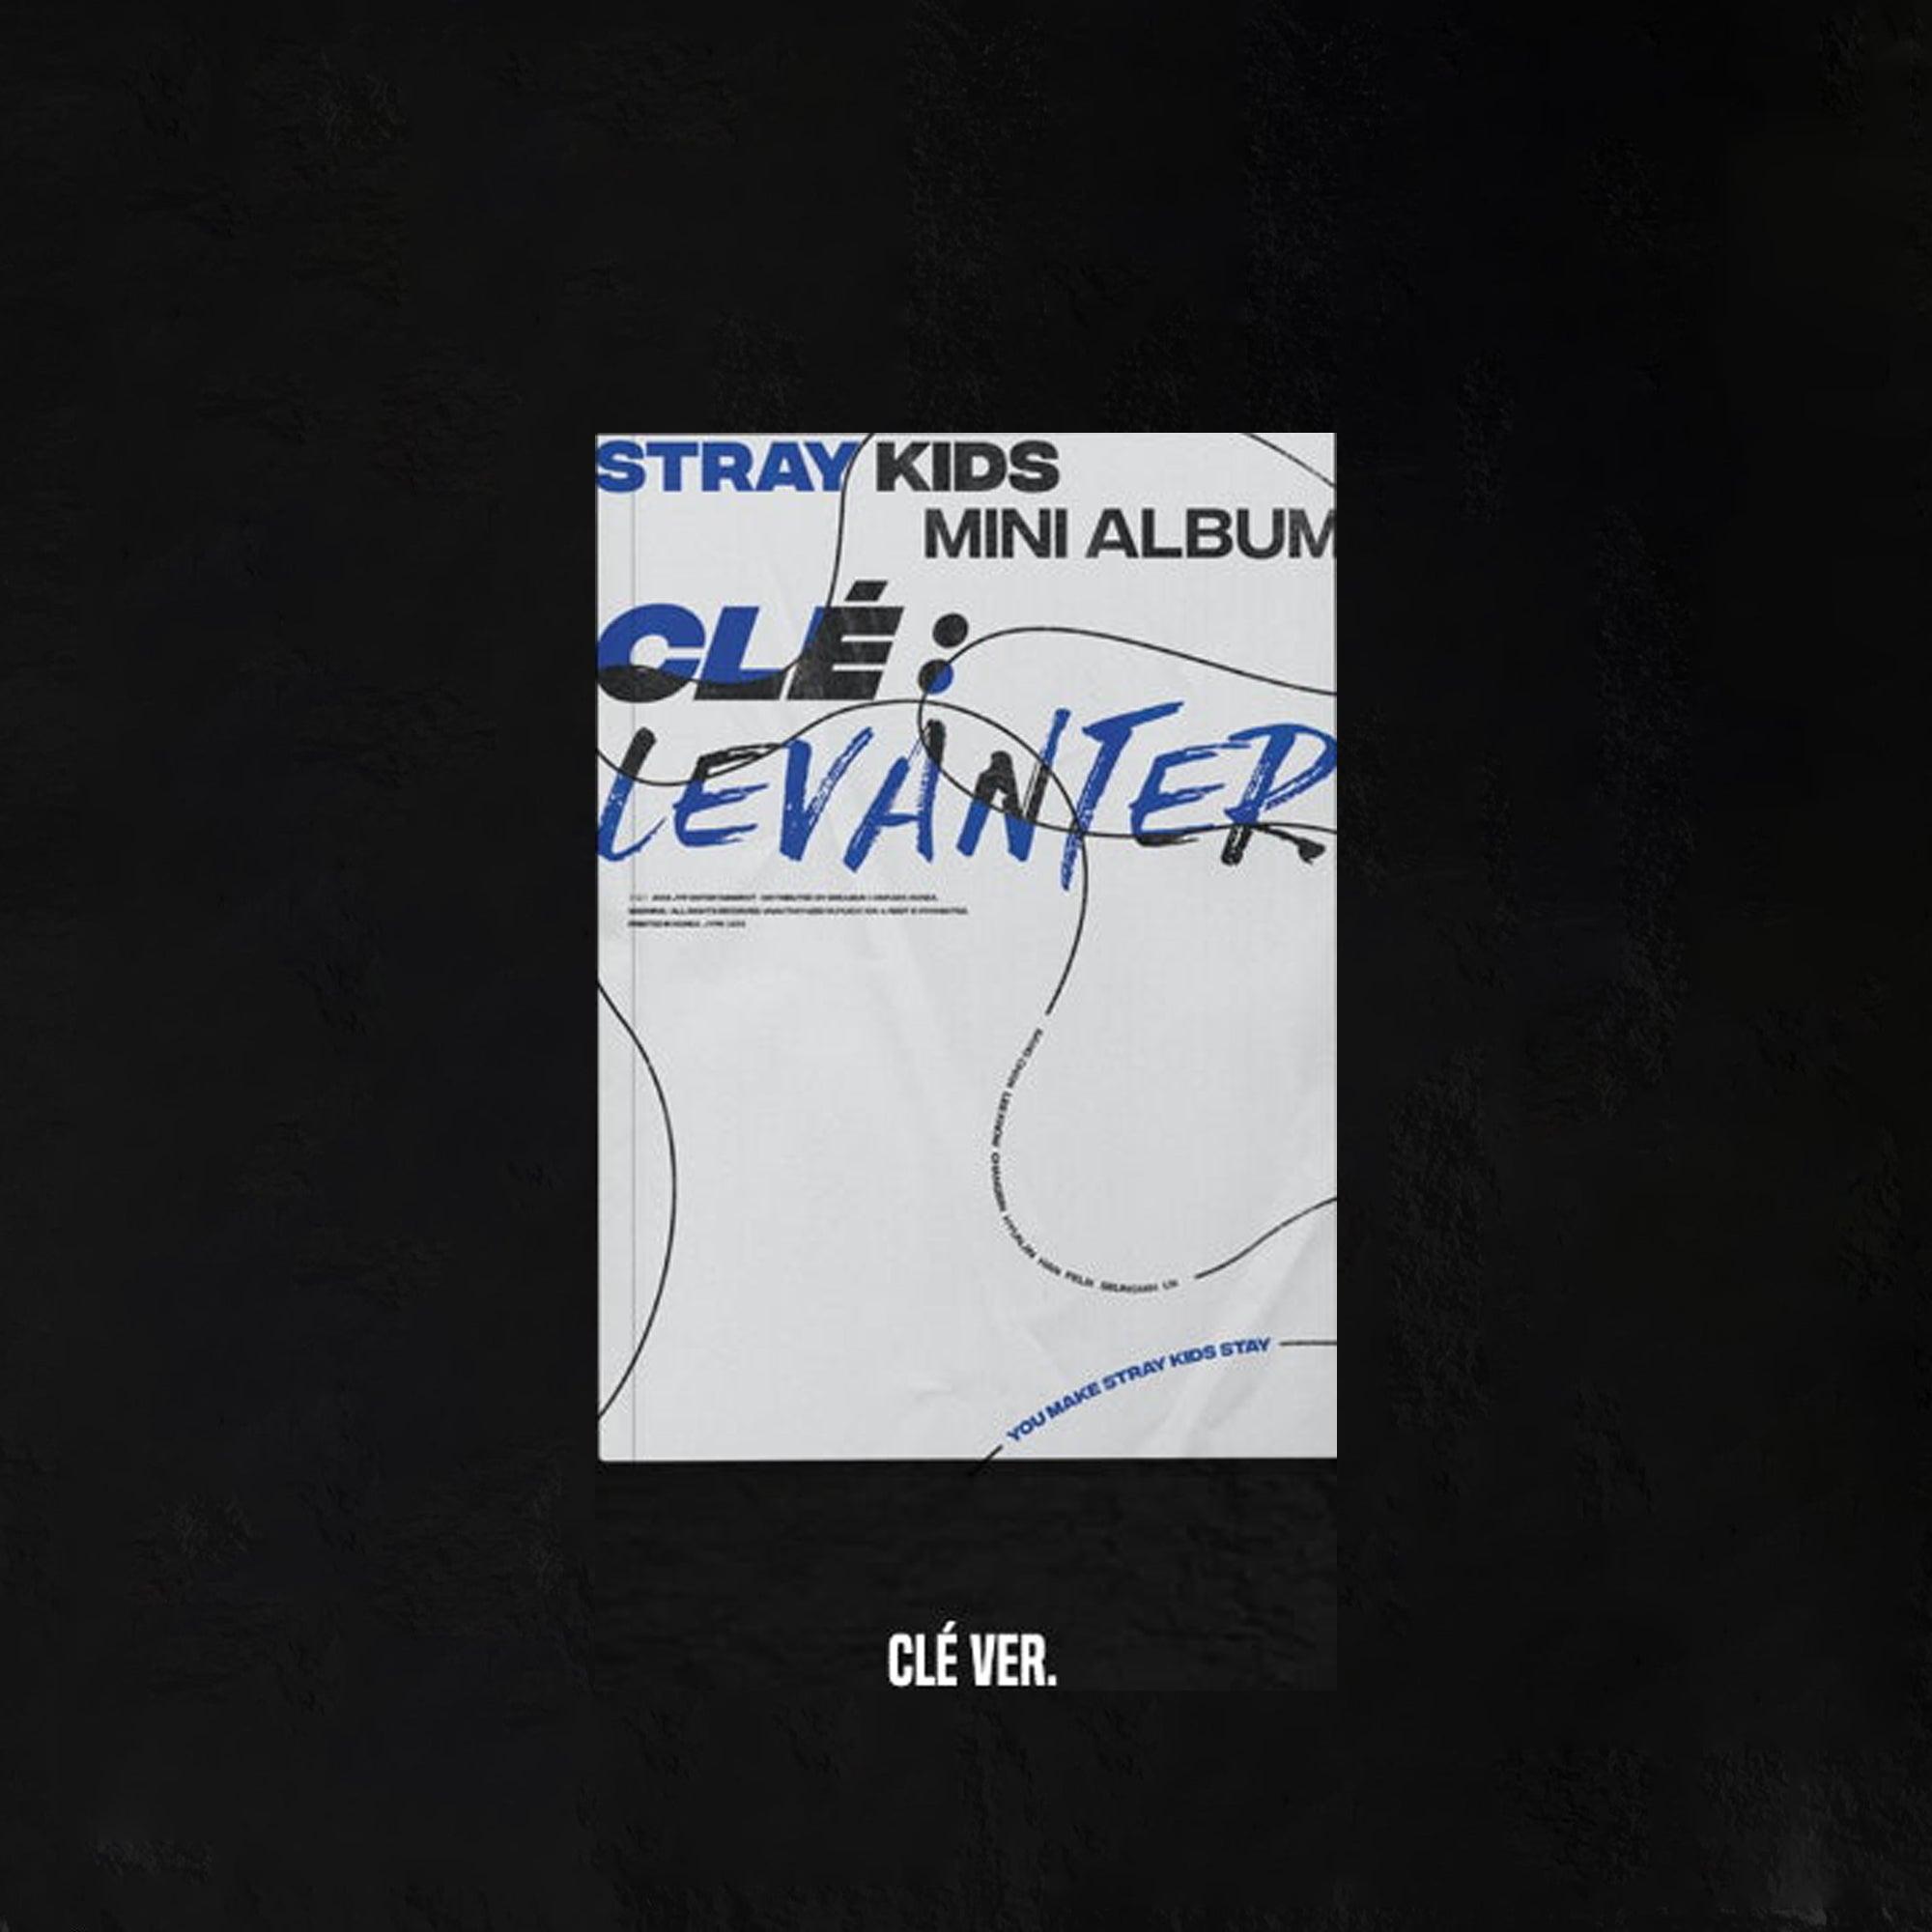 STRAY KIDS MINI ALBUM 'CLE : LEVANTER' (REGULAR VERSION) CLE VERSION COVER